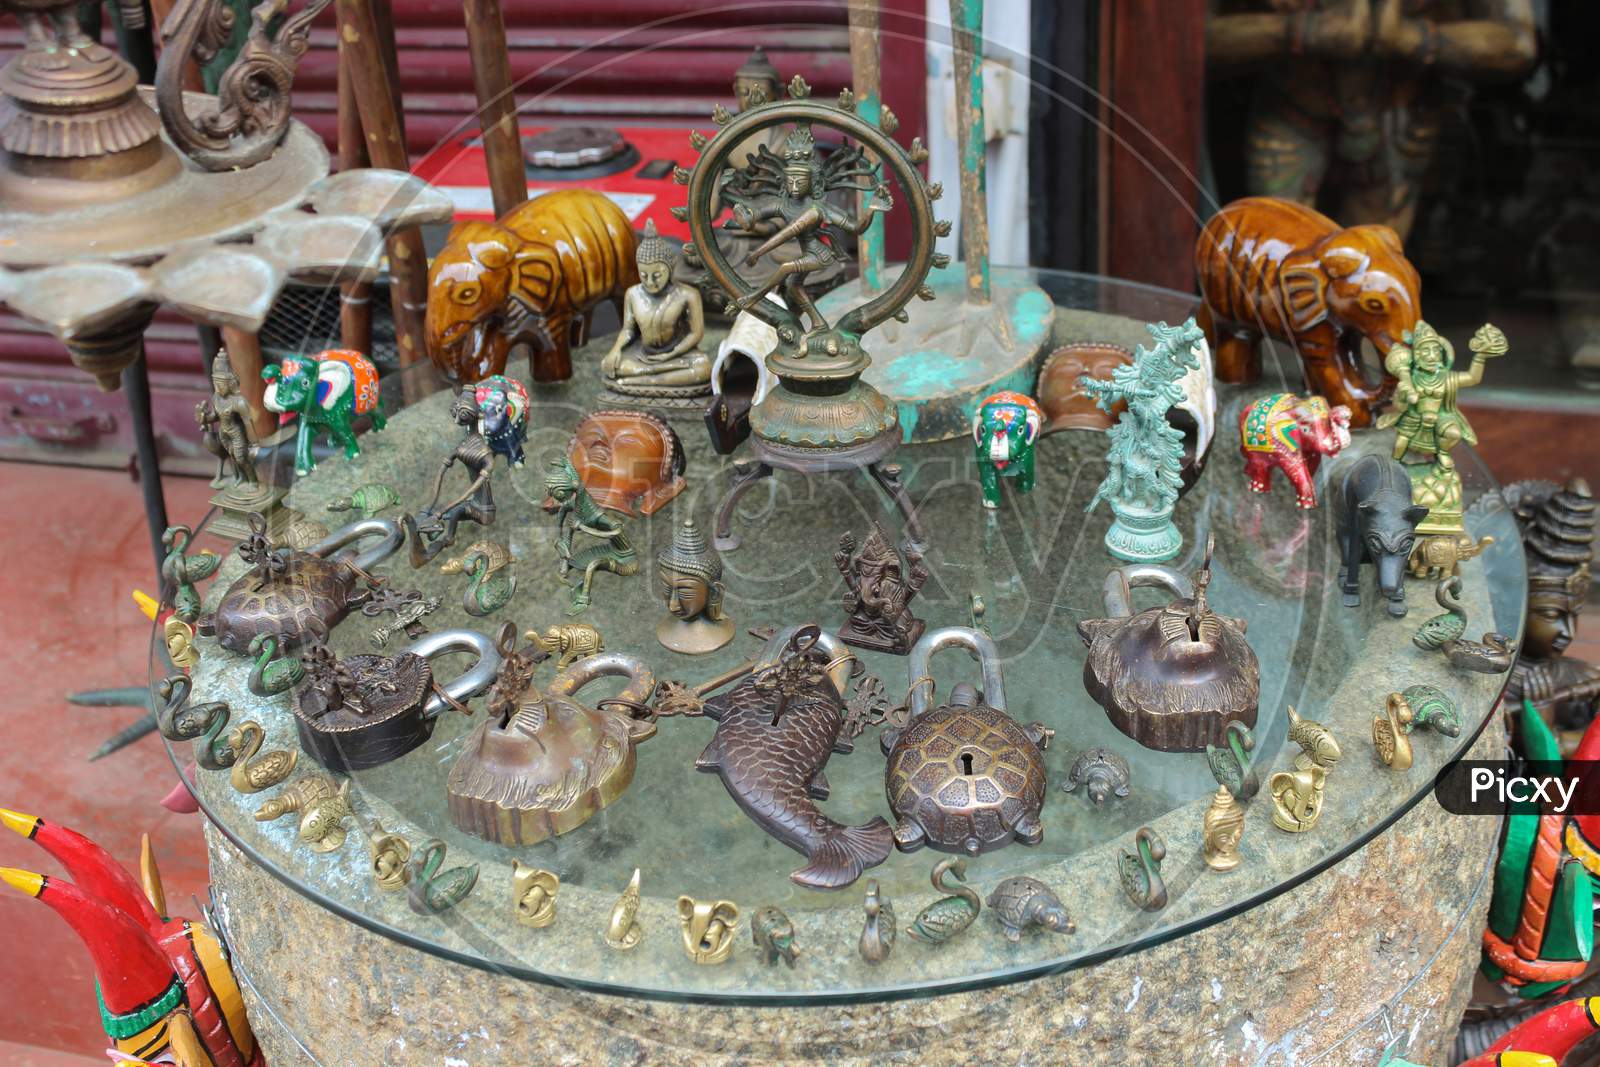 An Antiques shop displaying vintage things in Kochi/Kerala/India.